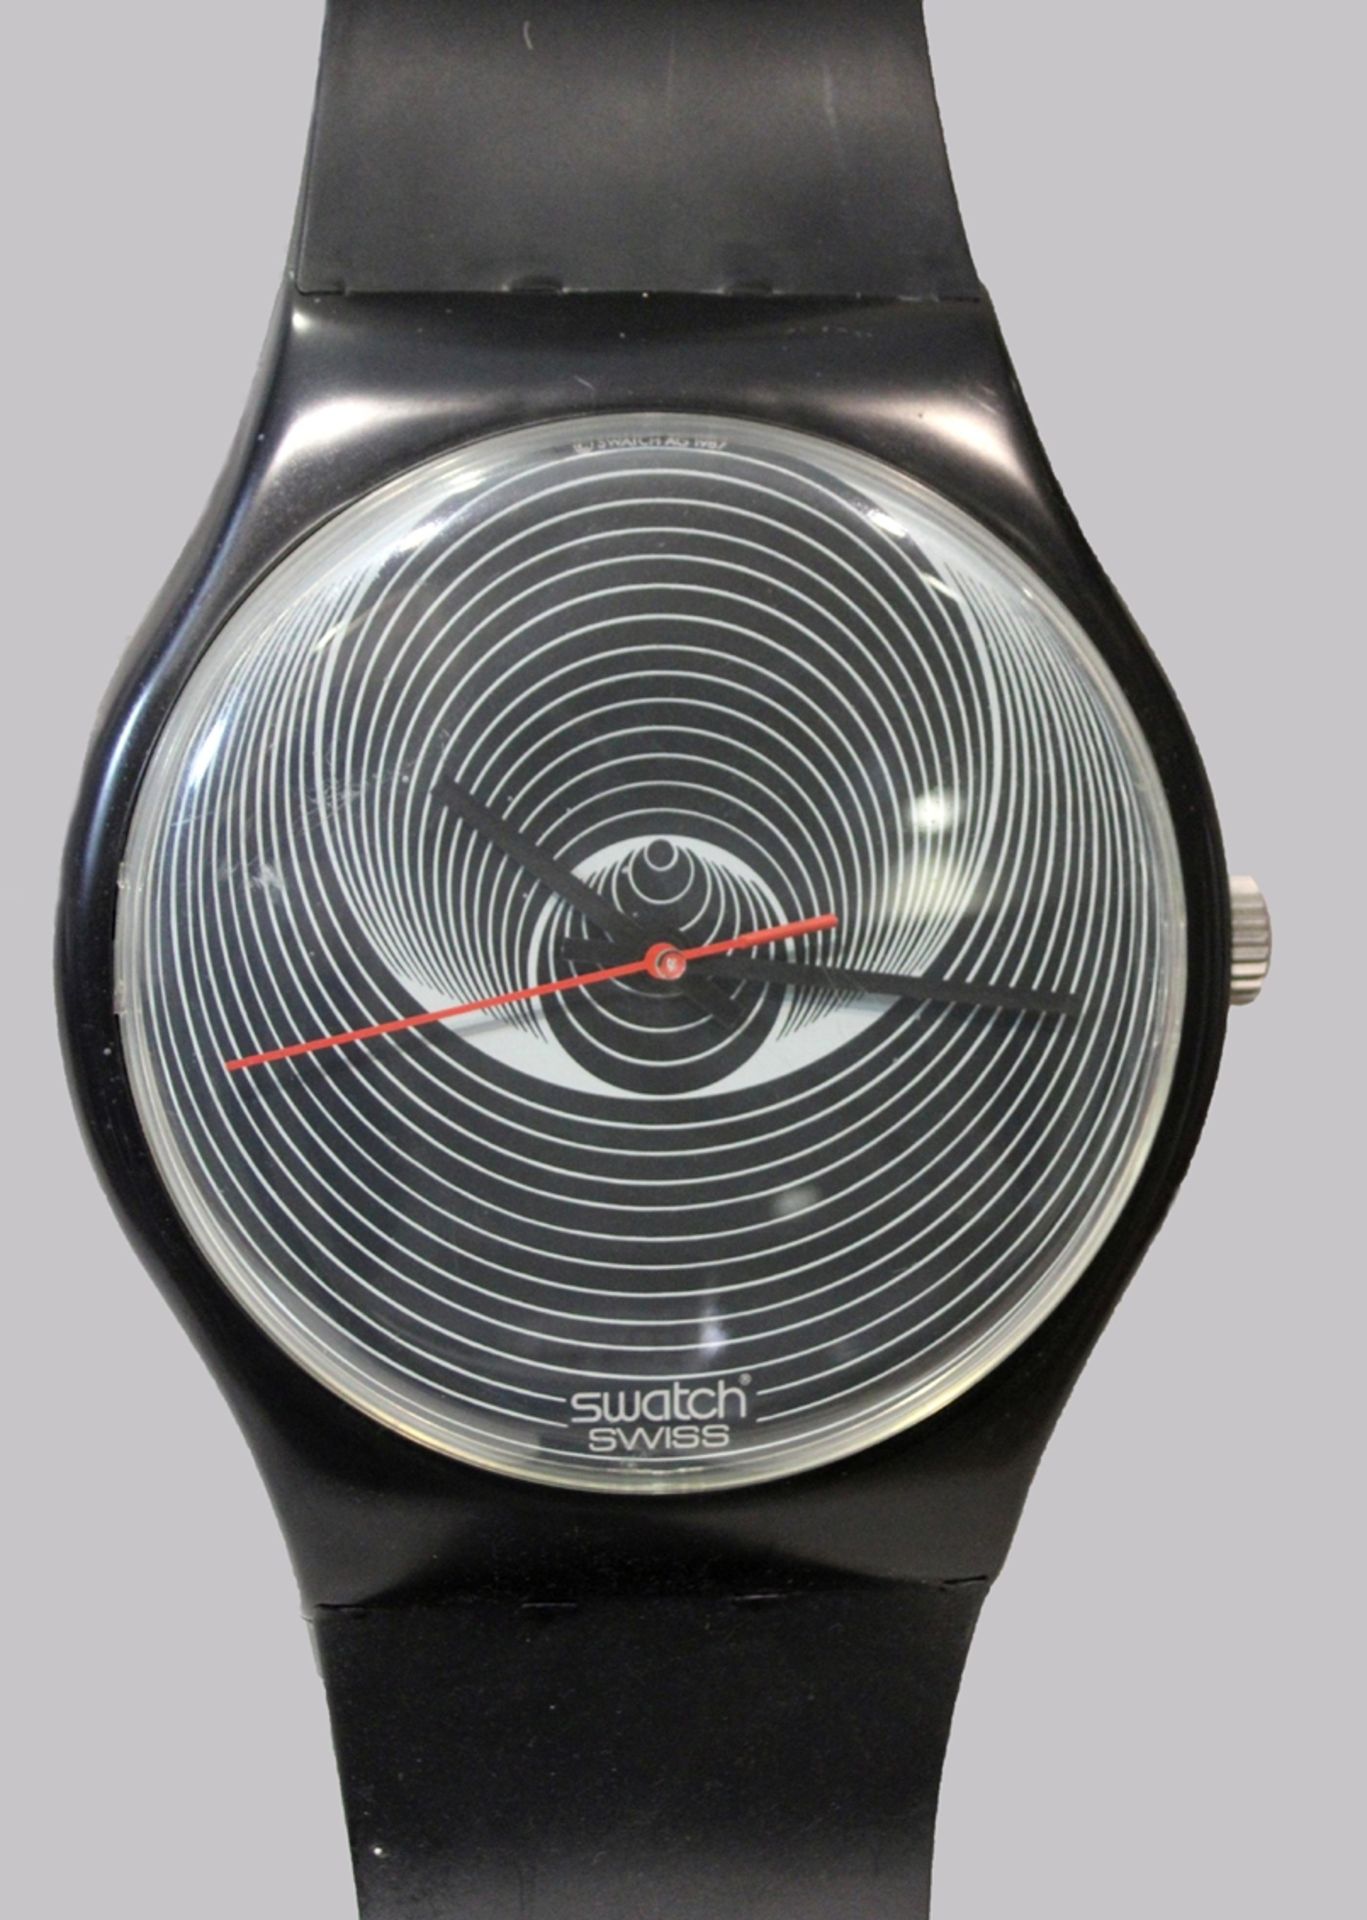 Swatch Wanduhr, 1987, Vulcano Maxi, L.: 208 cm. Guter Zustand. - Image 2 of 4